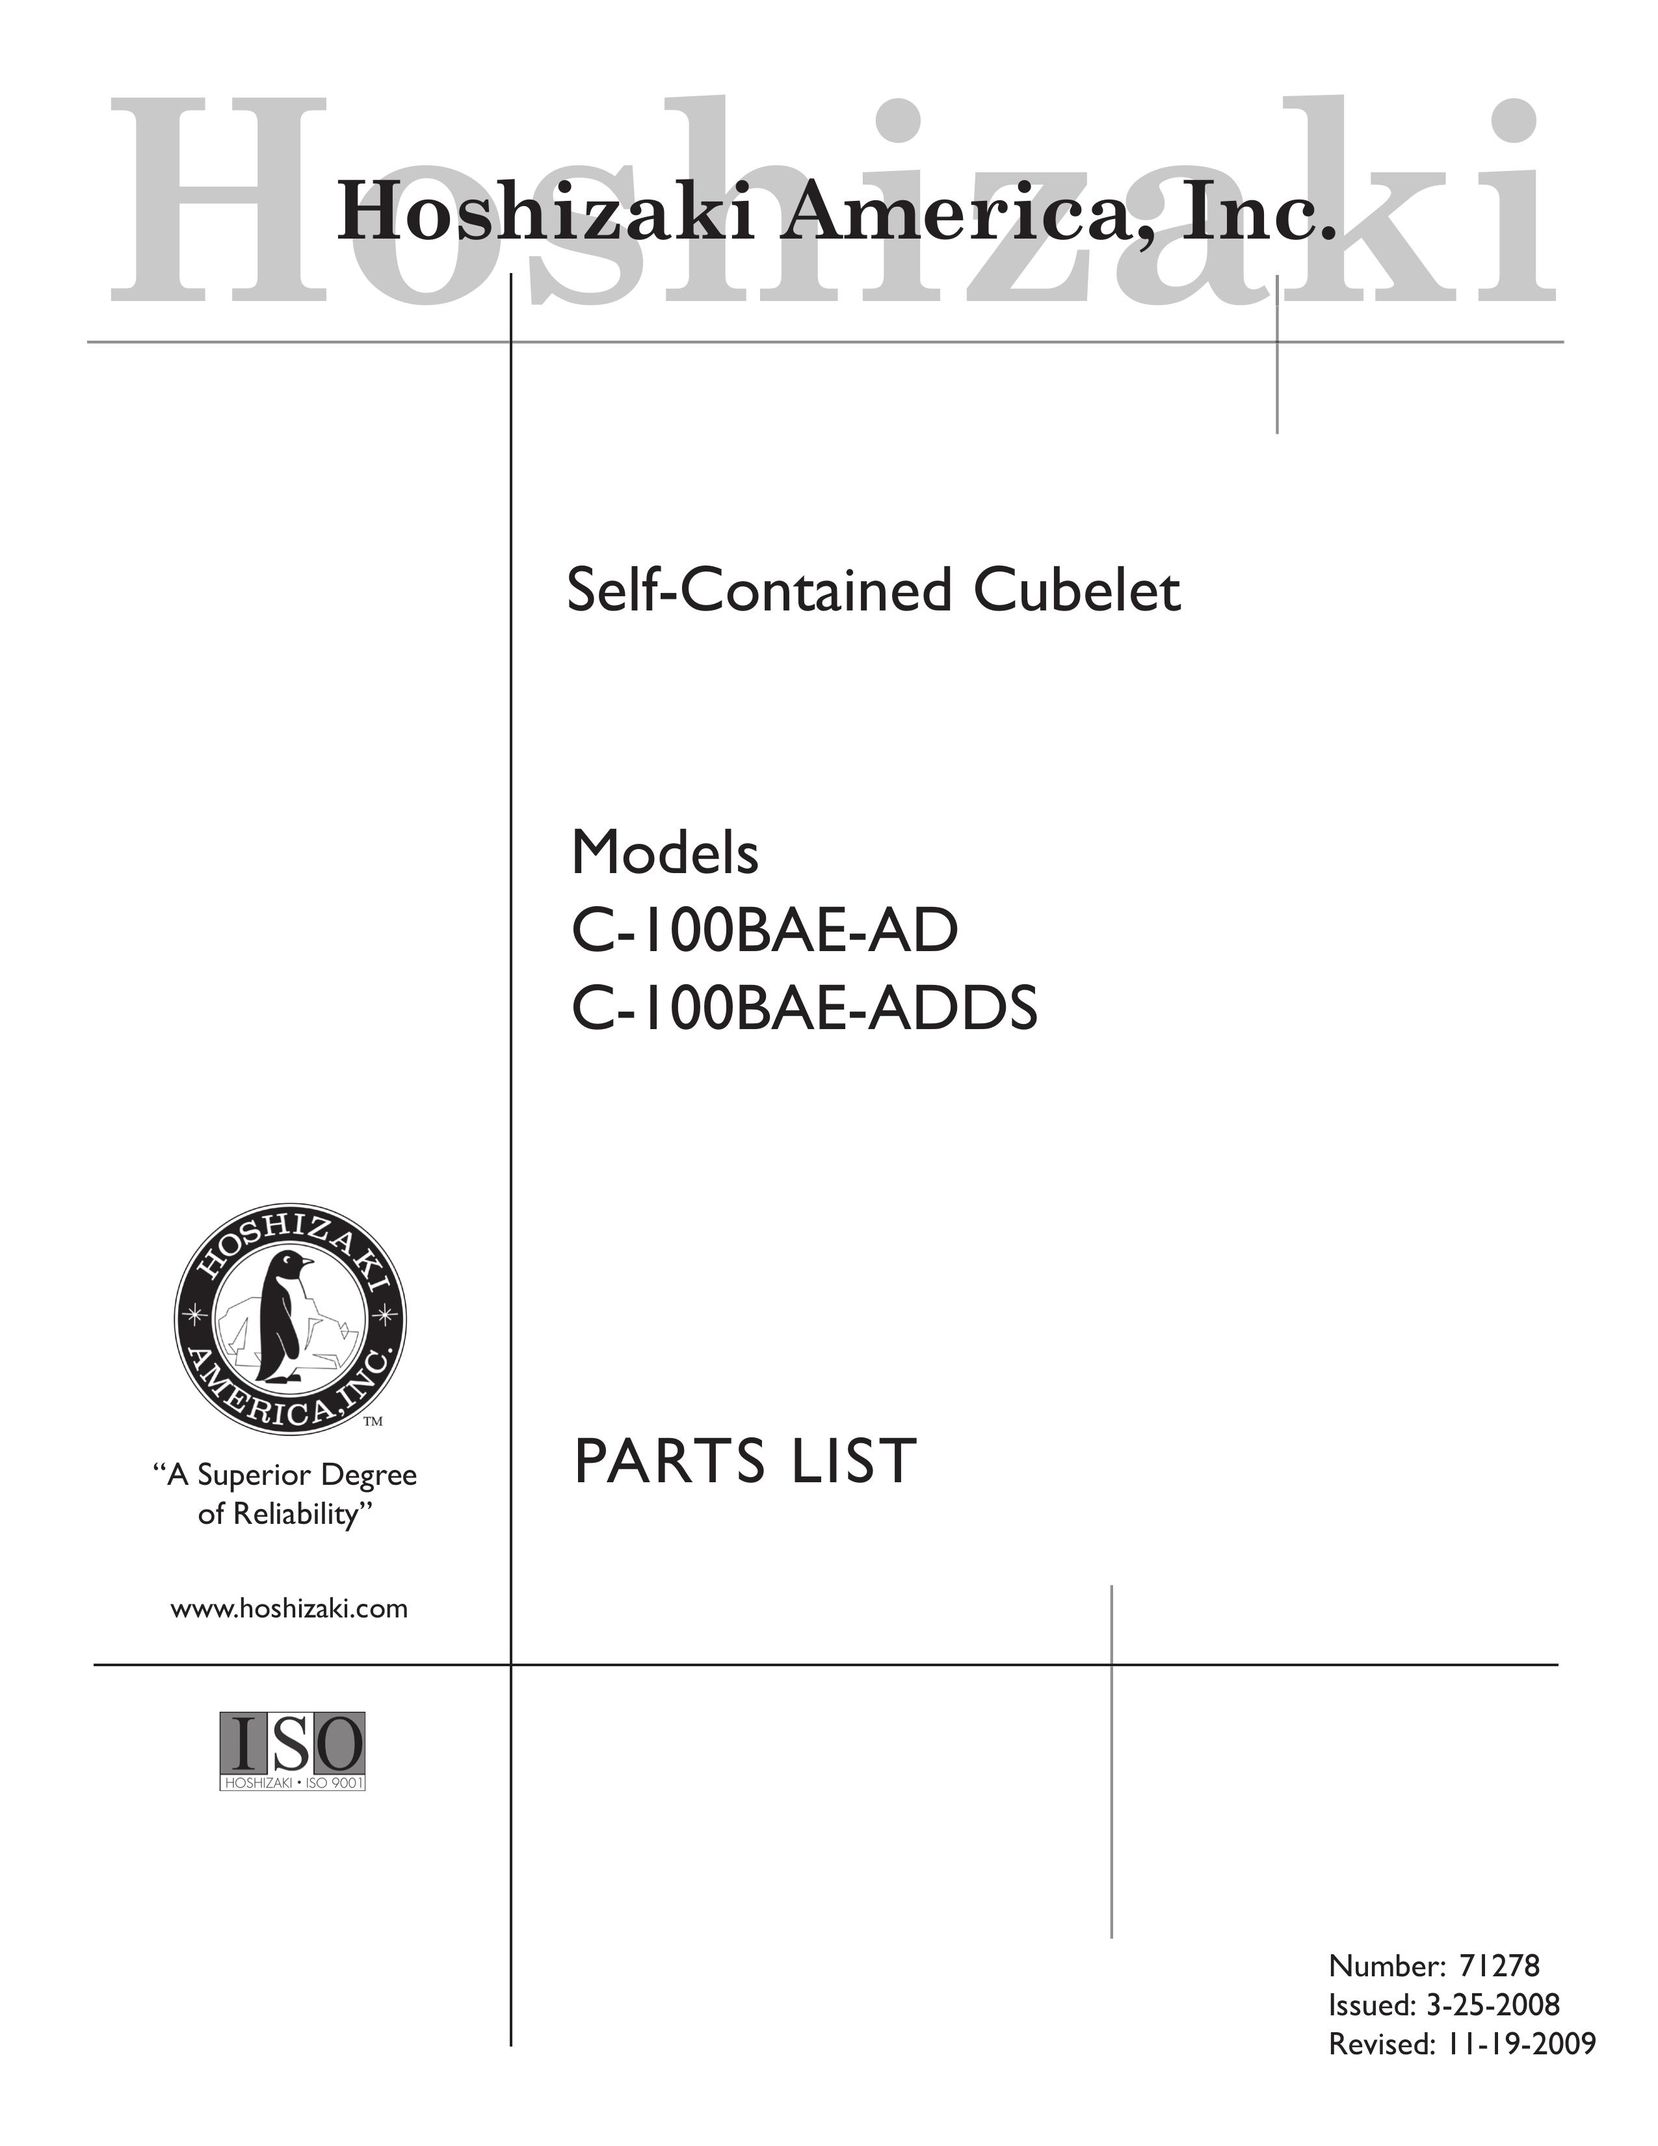 Hoshizaki C-100BAE-ADDS Ice Maker User Manual